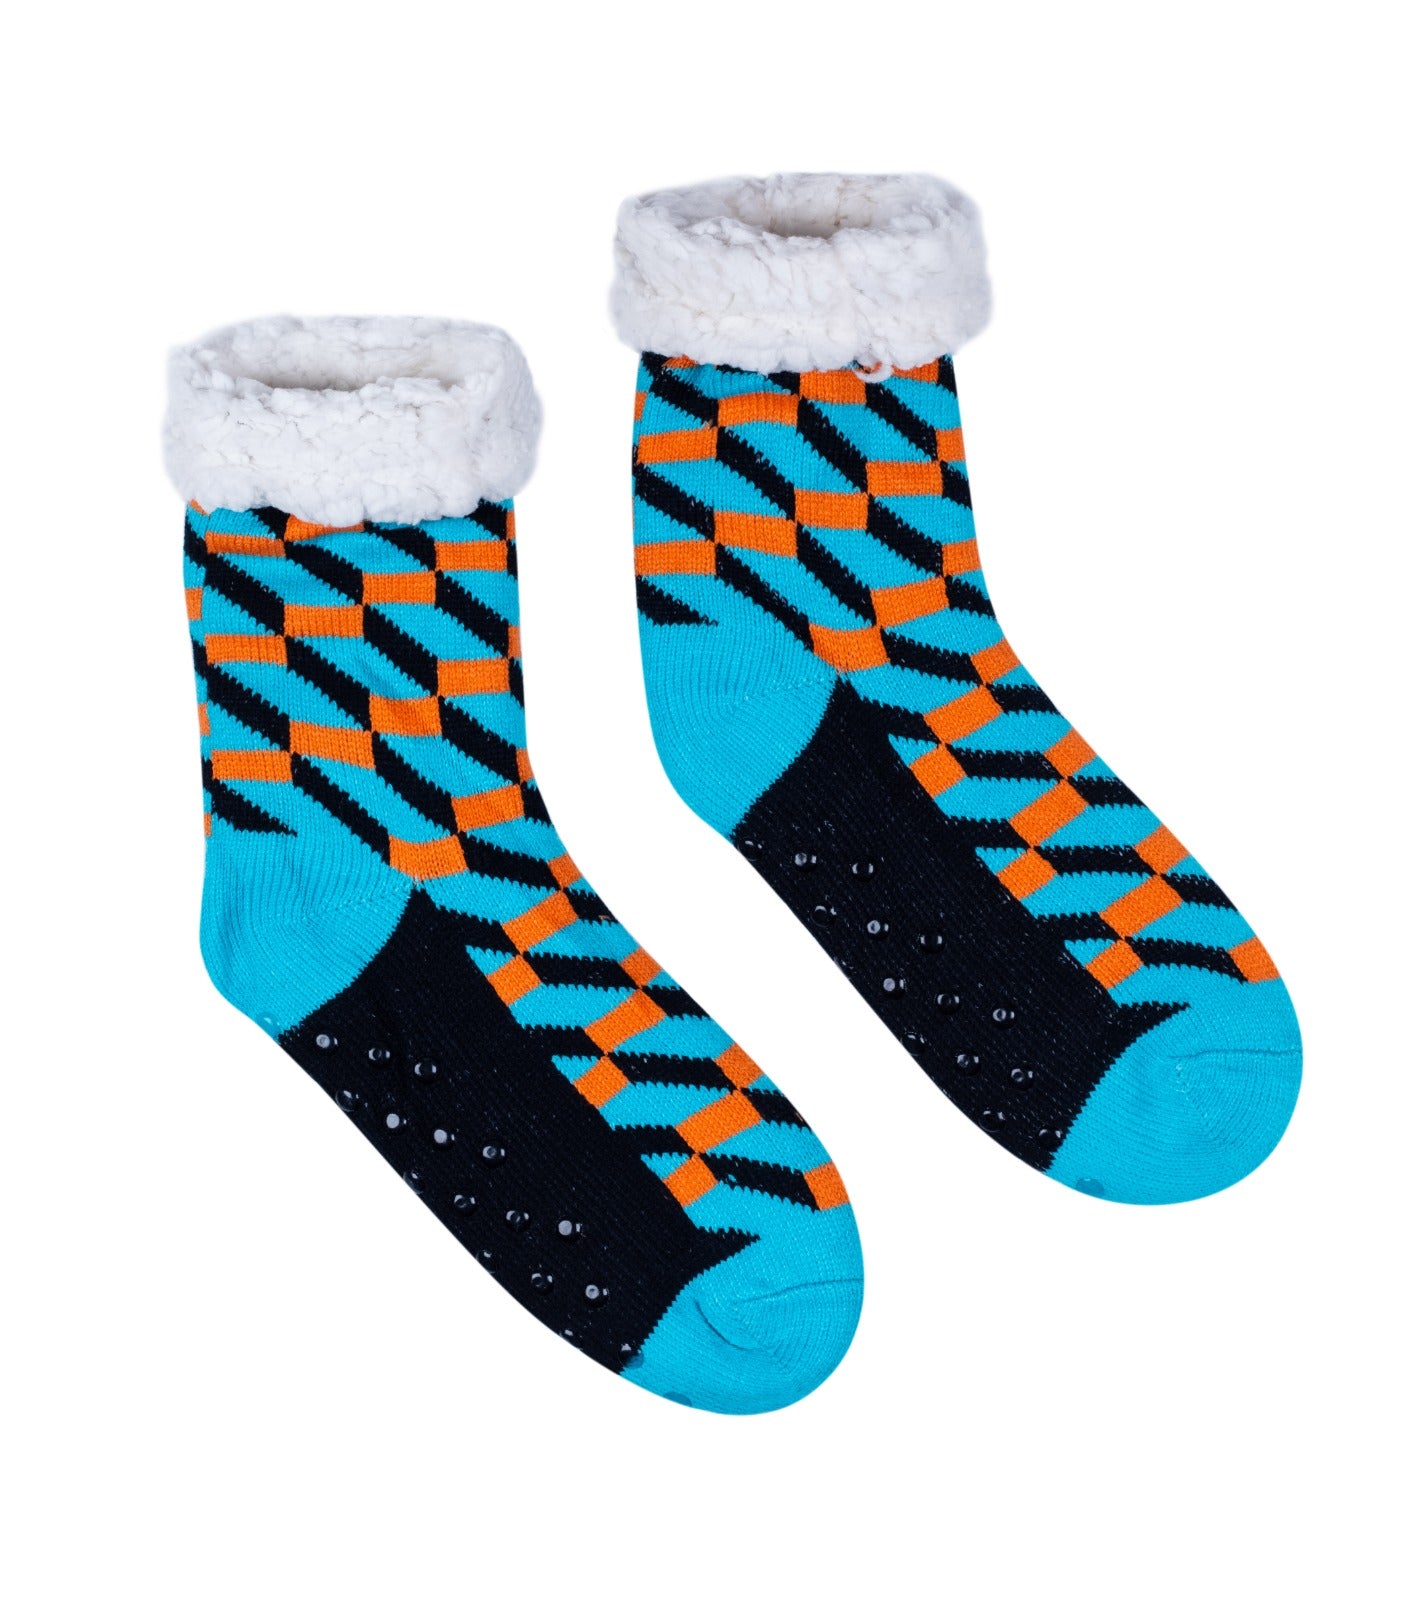 Geometric fluffy socks